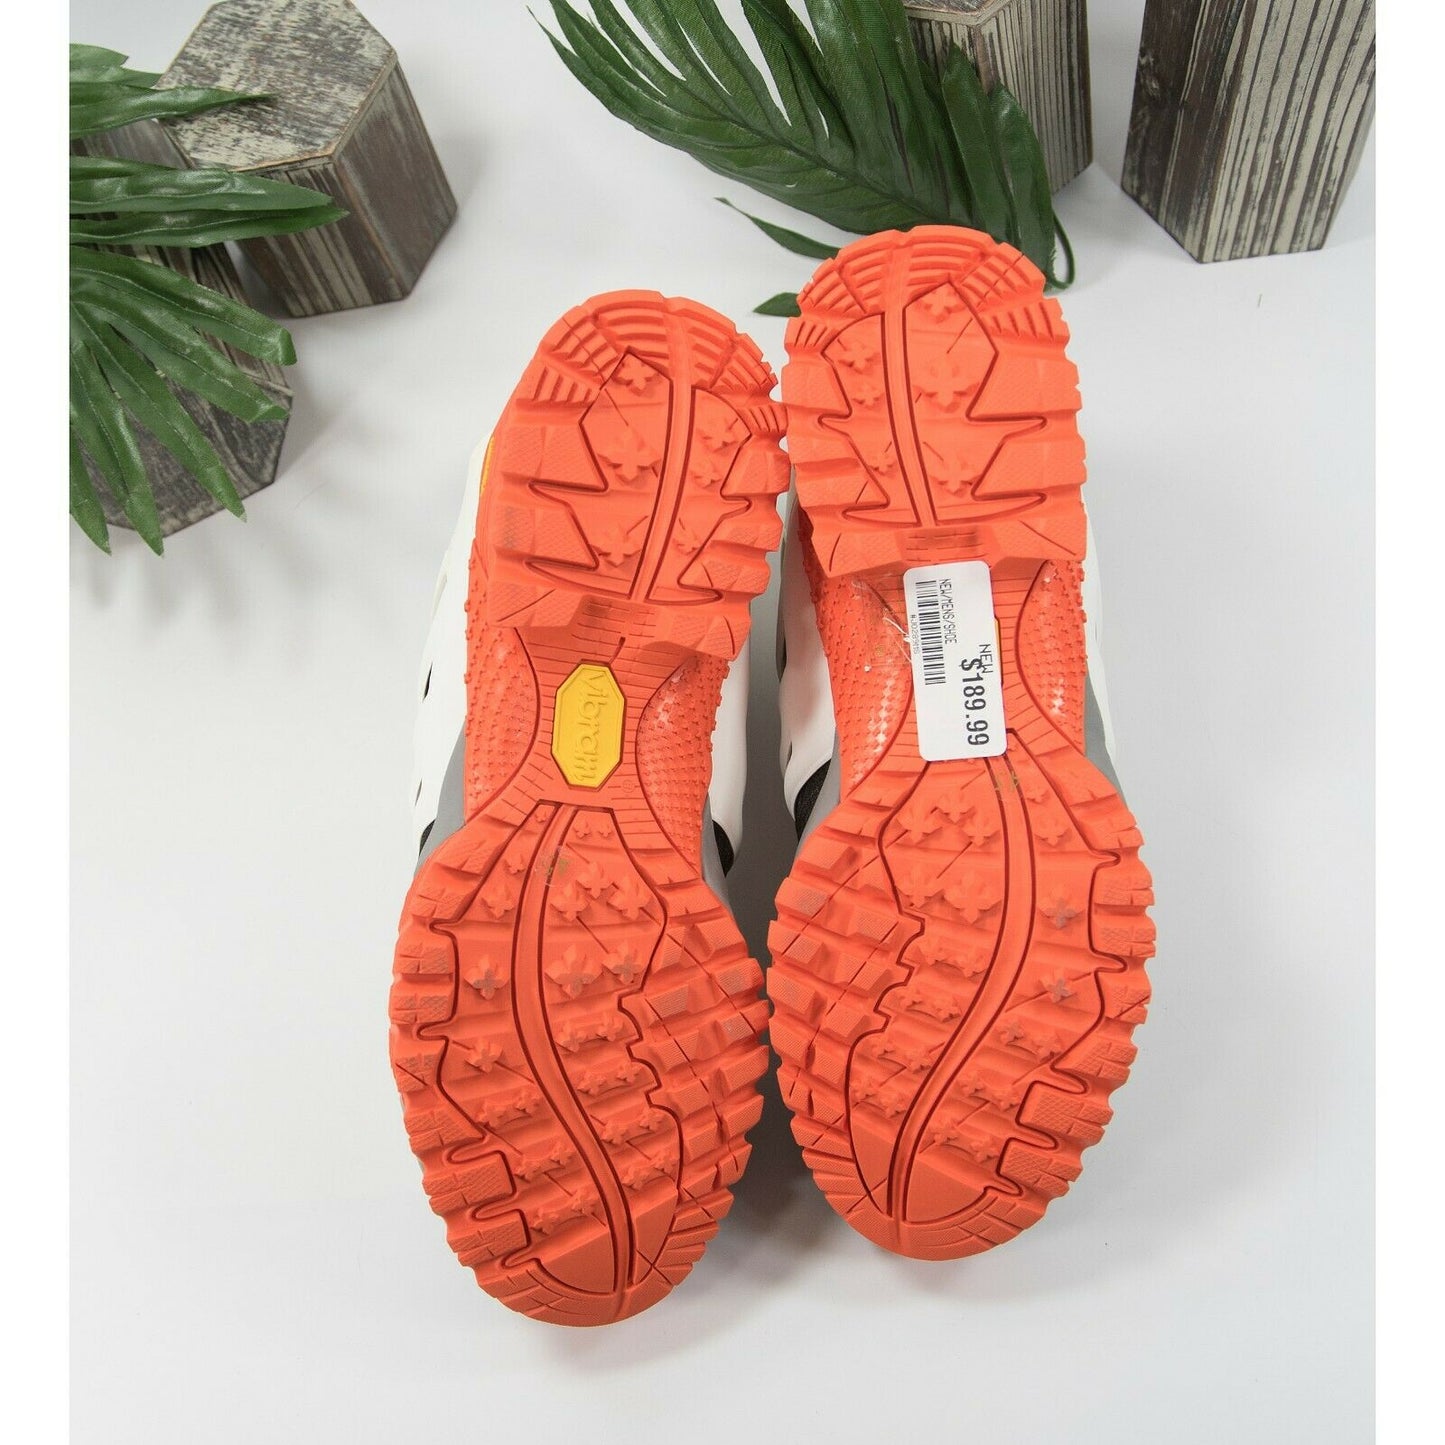 Sandro H14 Space White Orange Hiking Sneaker Shoes Size 45 US 12